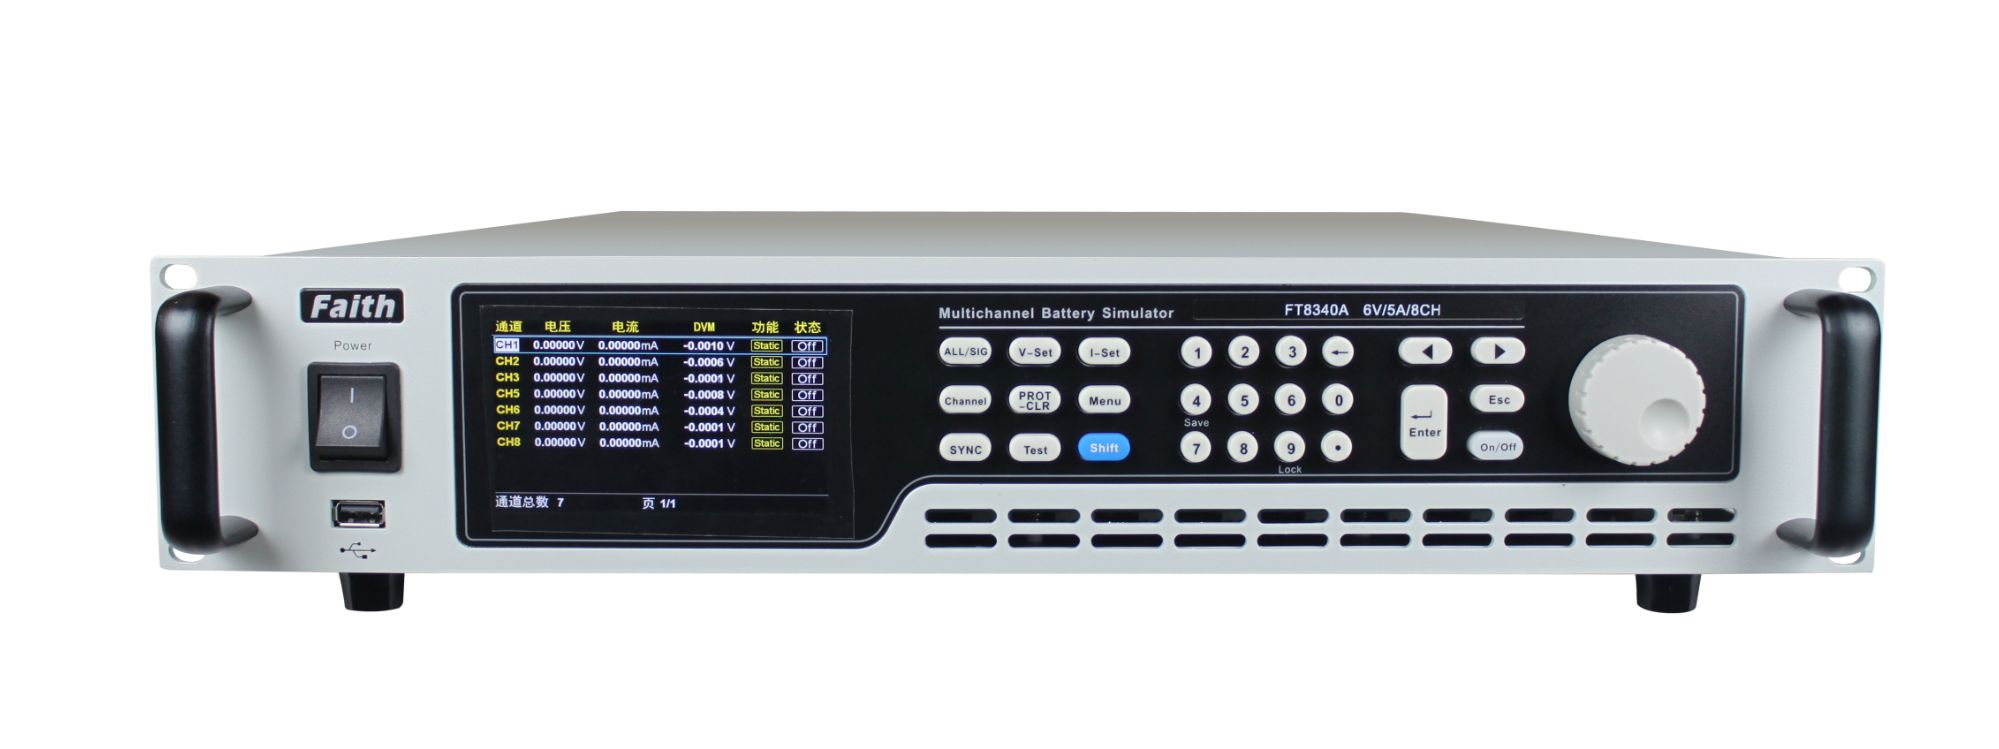 FT8340 series Multi channel battery simulator